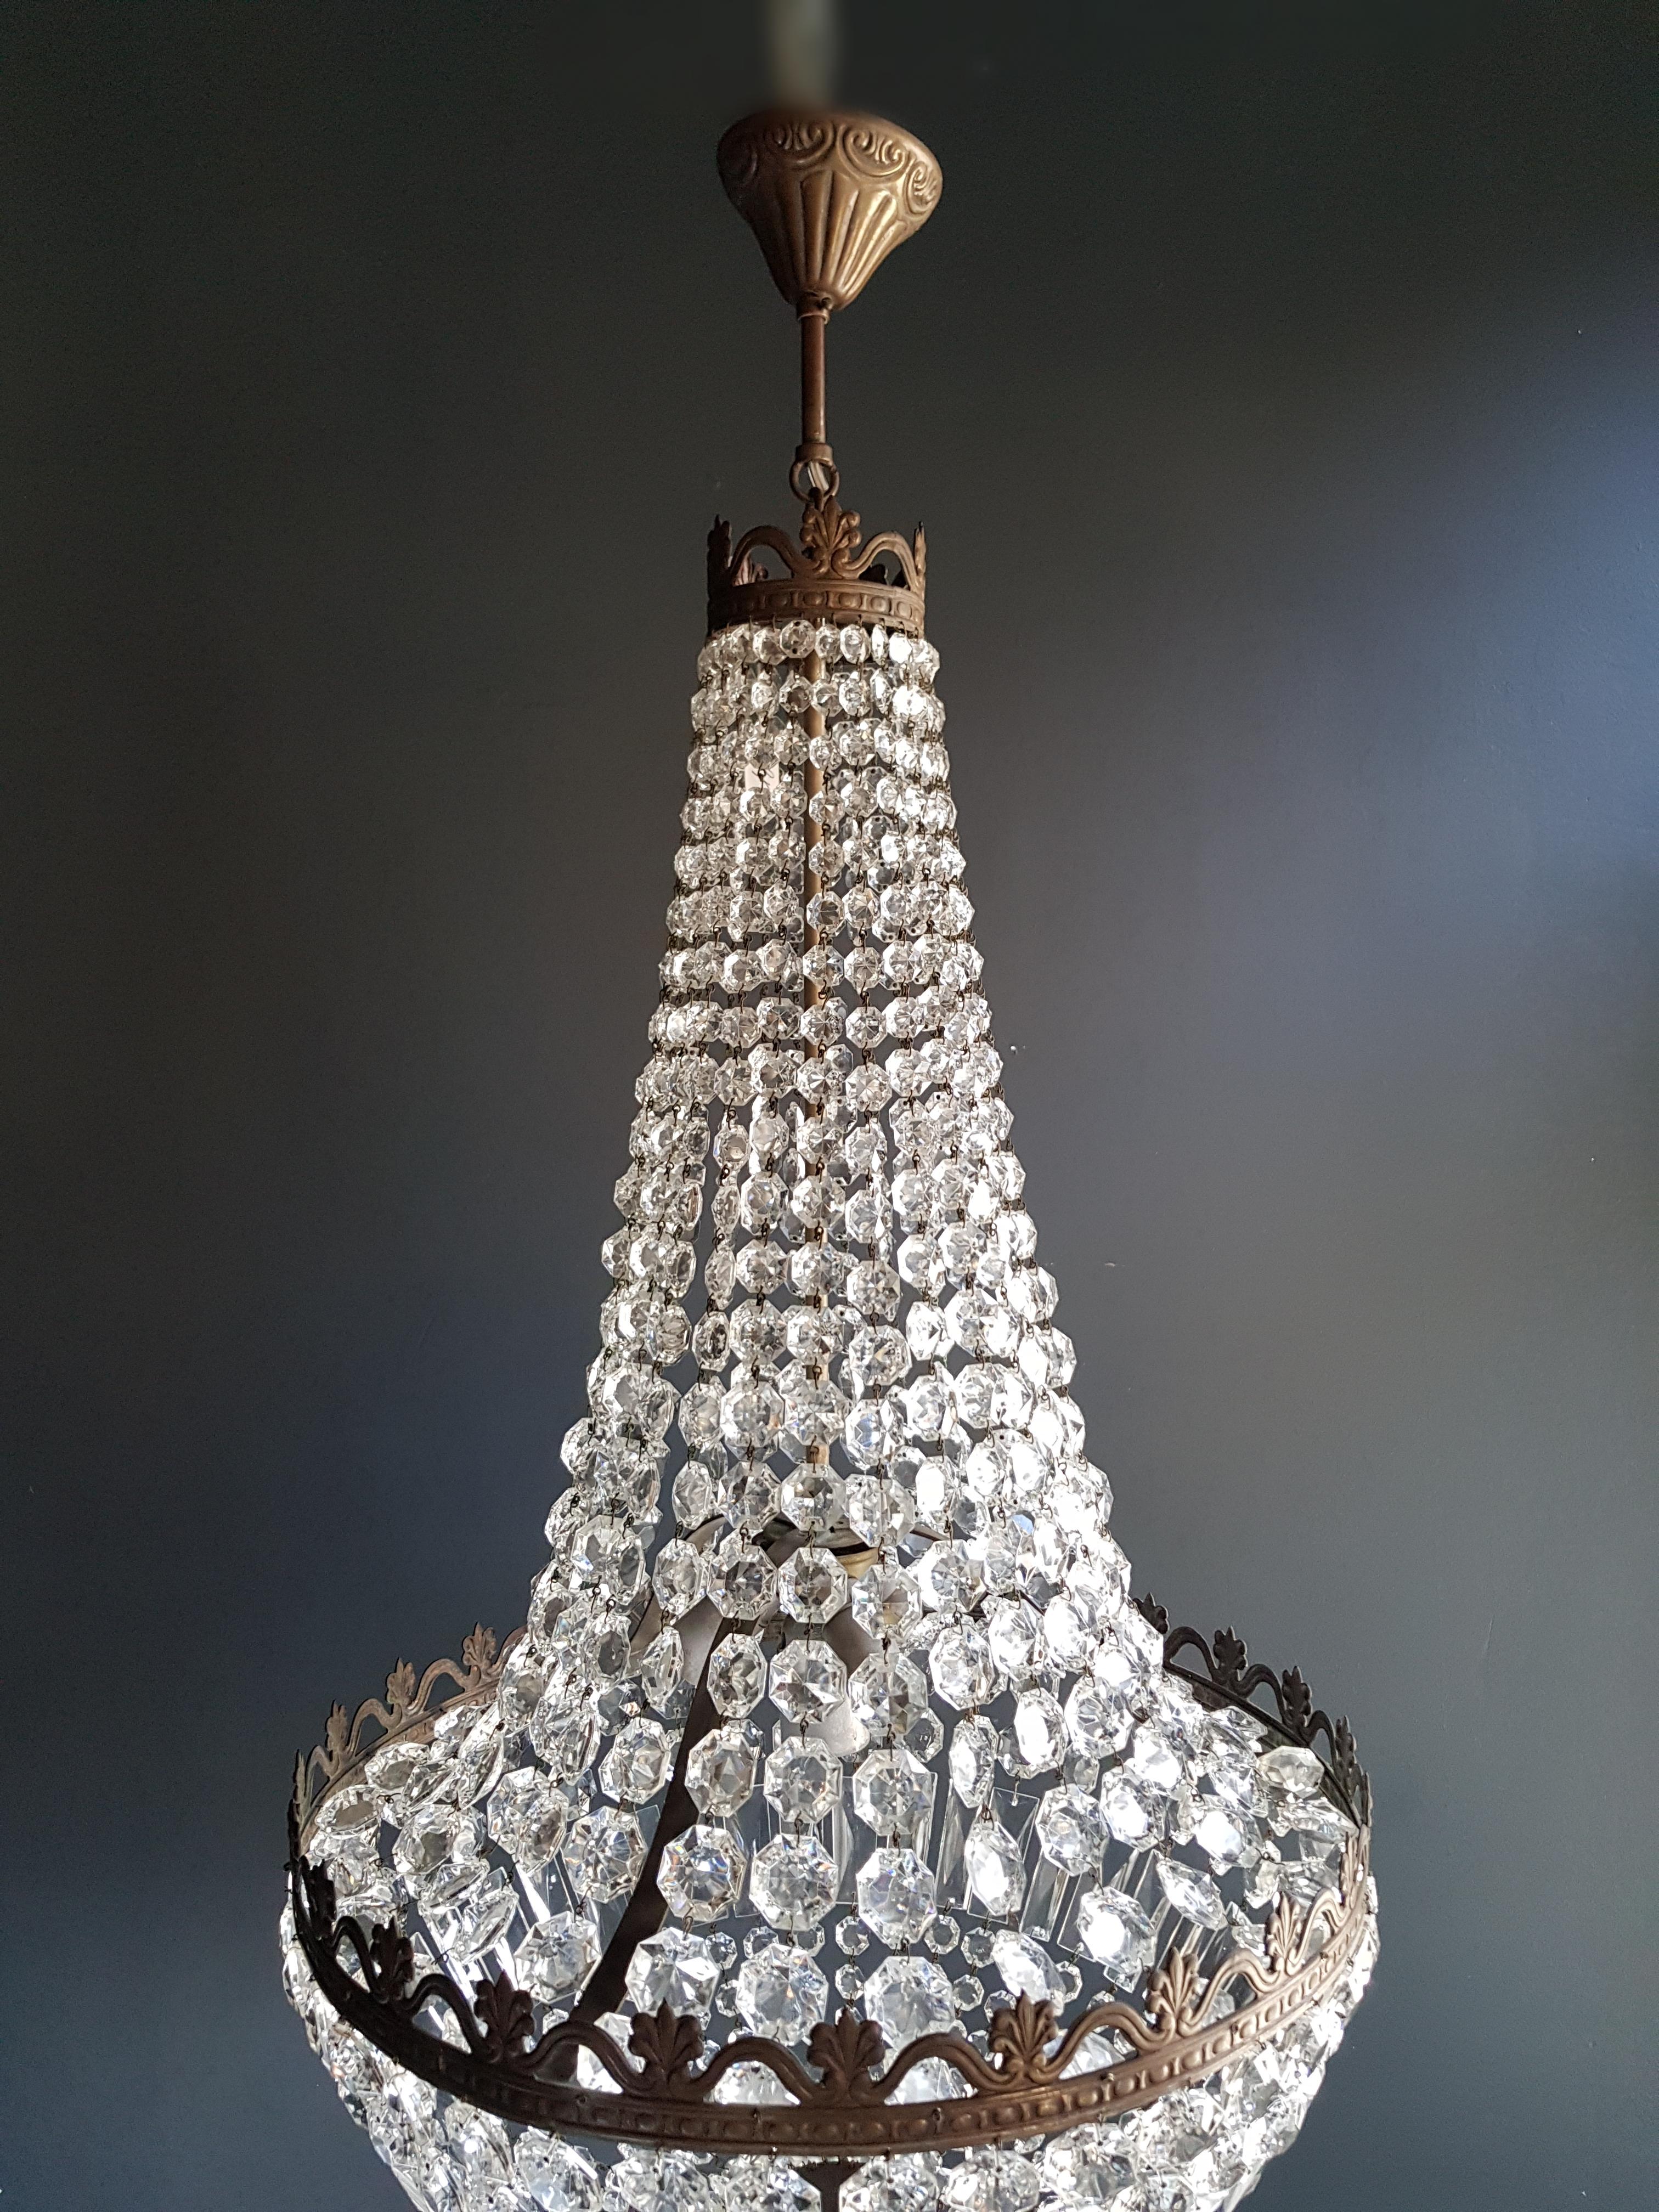 European Montgolfiè Empire Sac a Pearl Chandelier Crystal Lustre Ceiling Lamp Antique